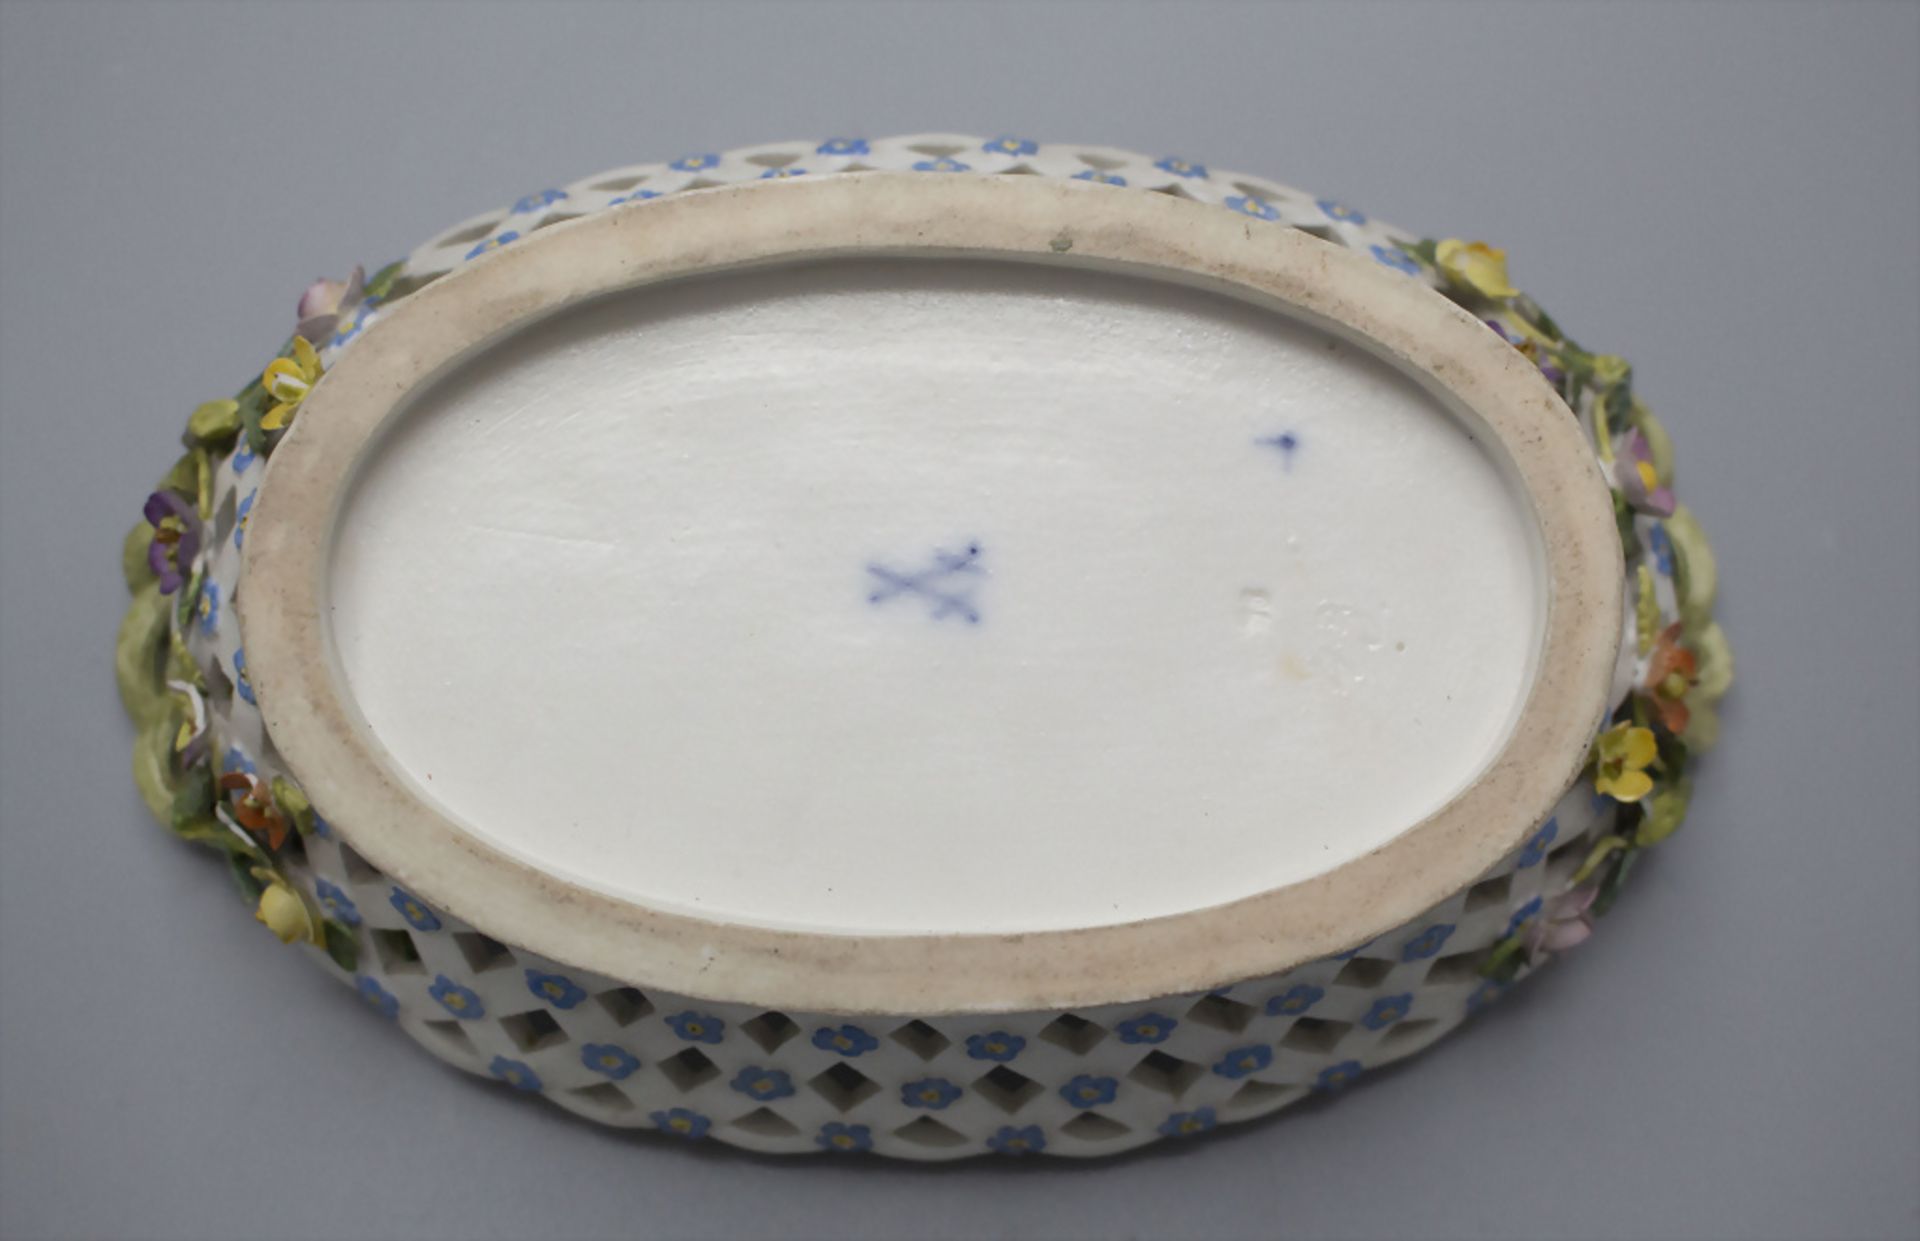 Zierschale mit aufgelegten Blüten / A decorative bowl with encrusted forget-me-not blossoms ... - Bild 5 aus 5